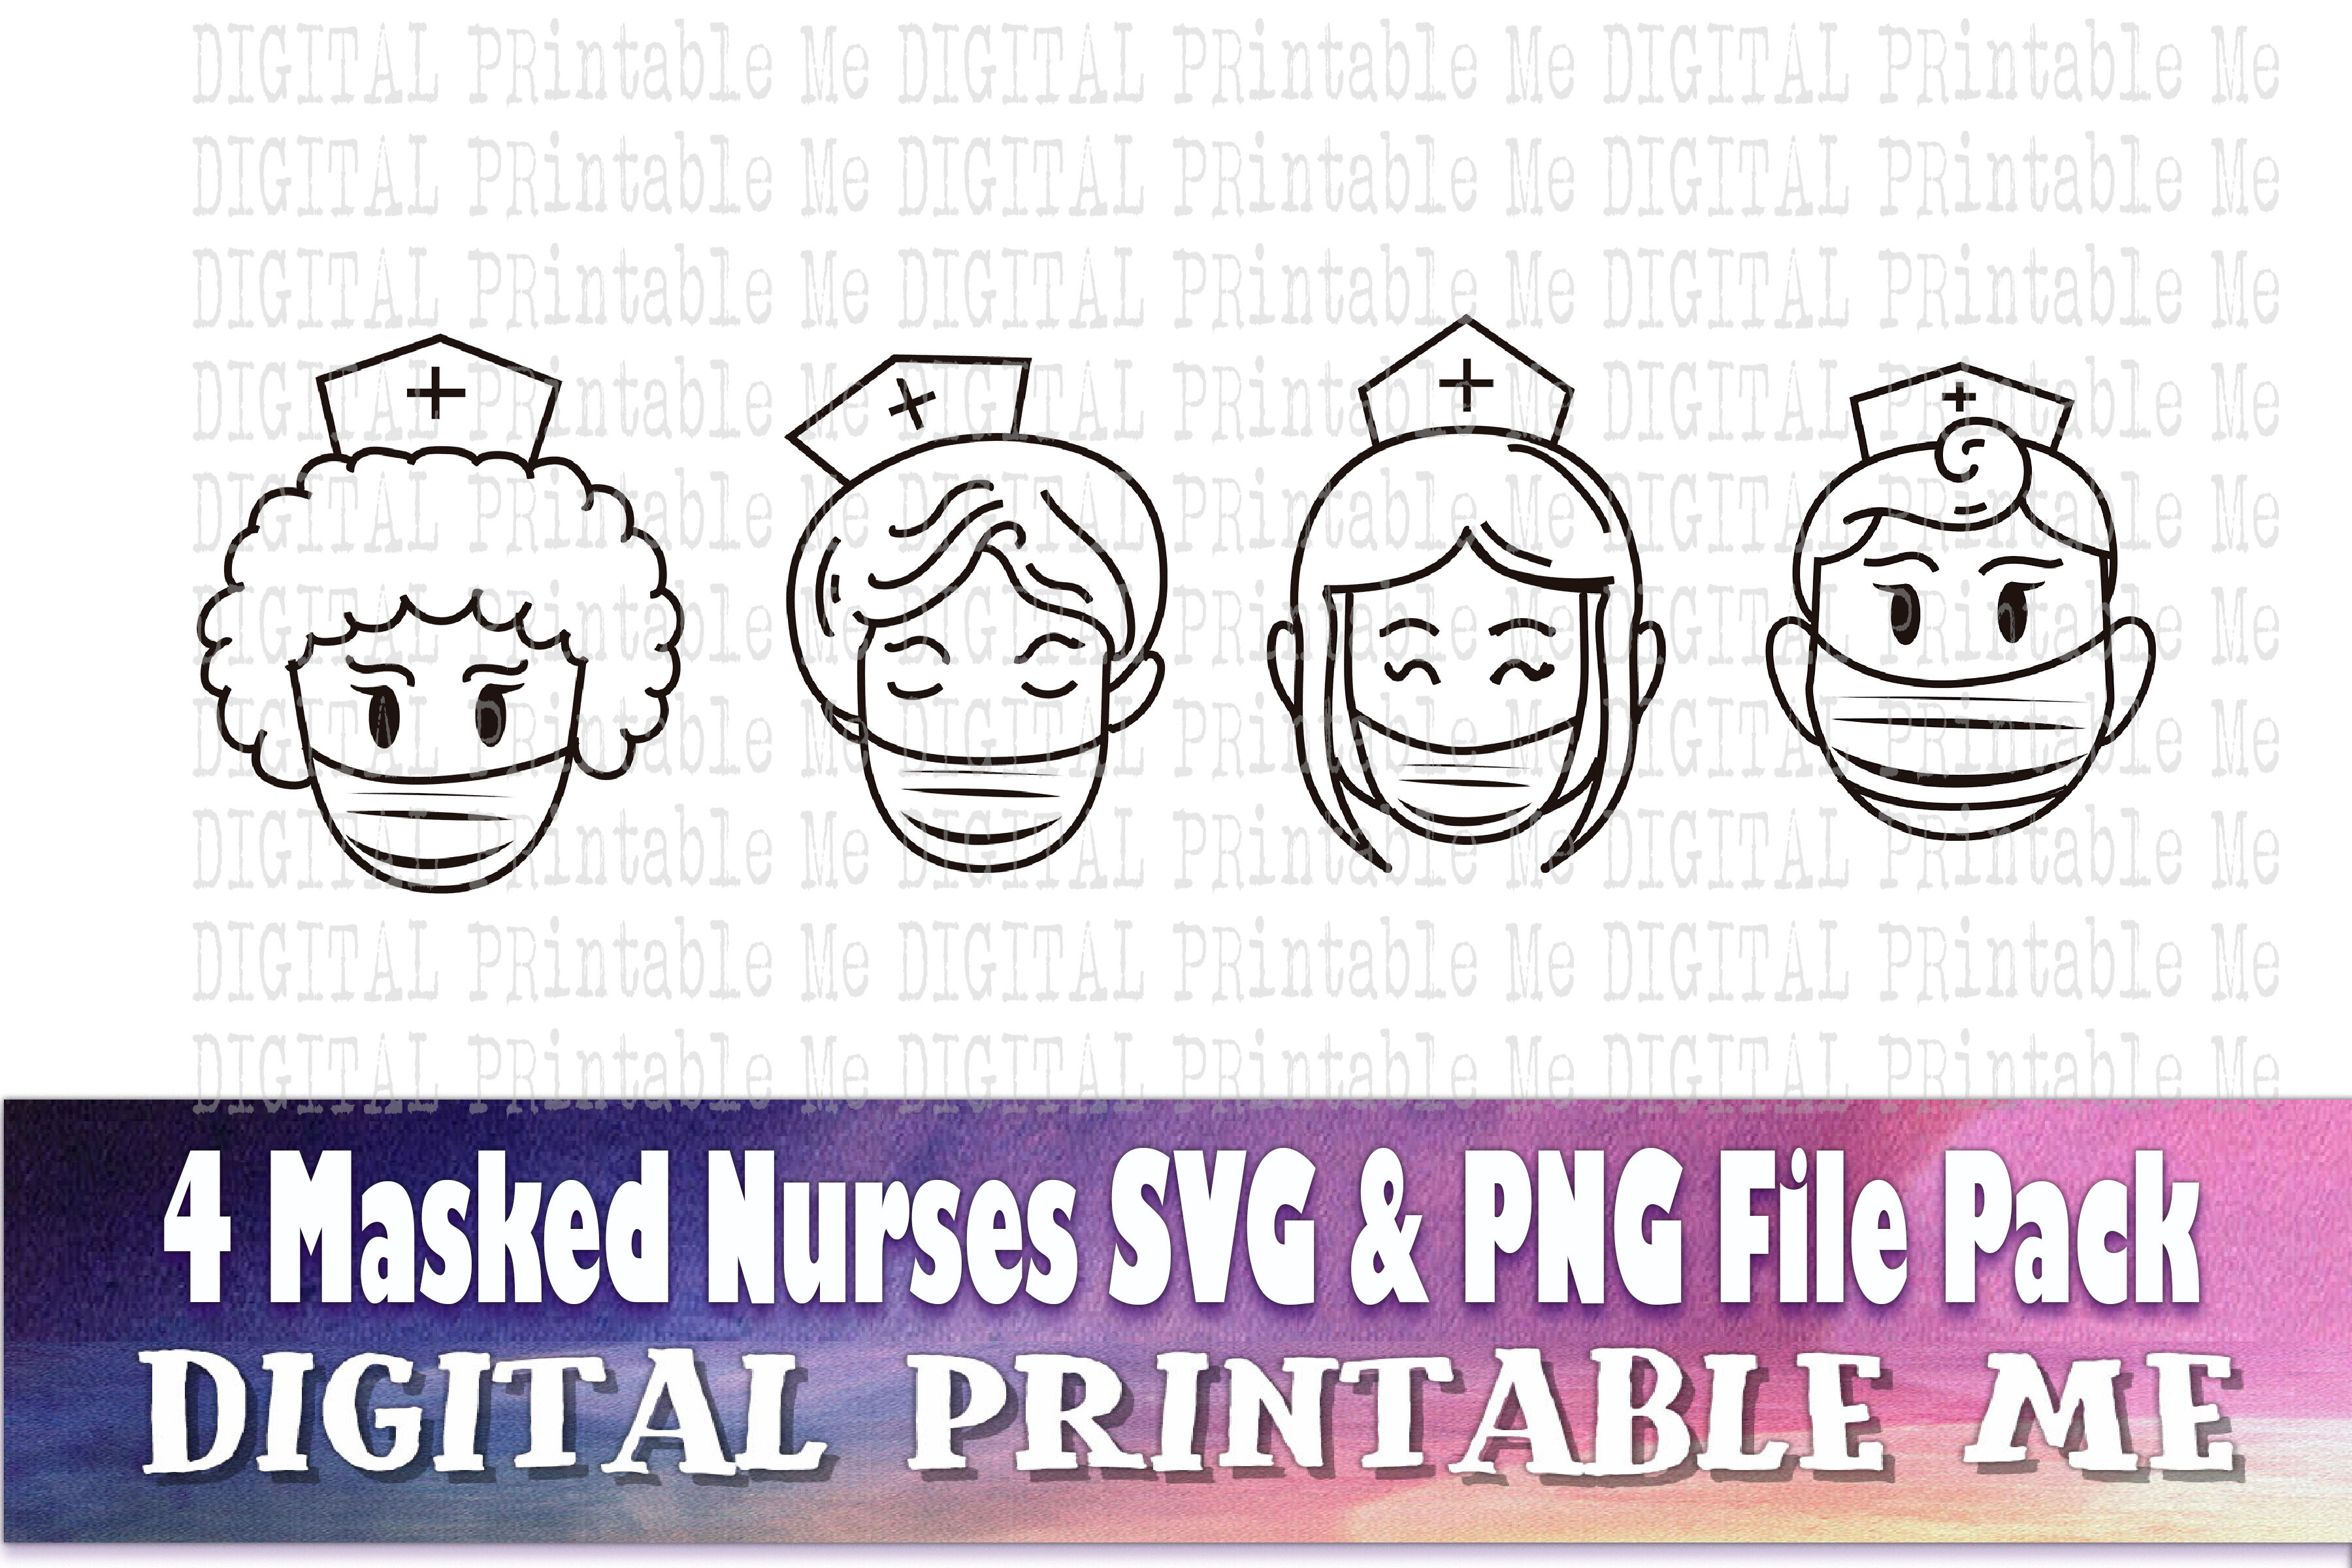 Nurse Wearing Masks Bundles Svg Png Files Covid 19 2020 Socia By Digitalprintableme Thehungryjpeg Com